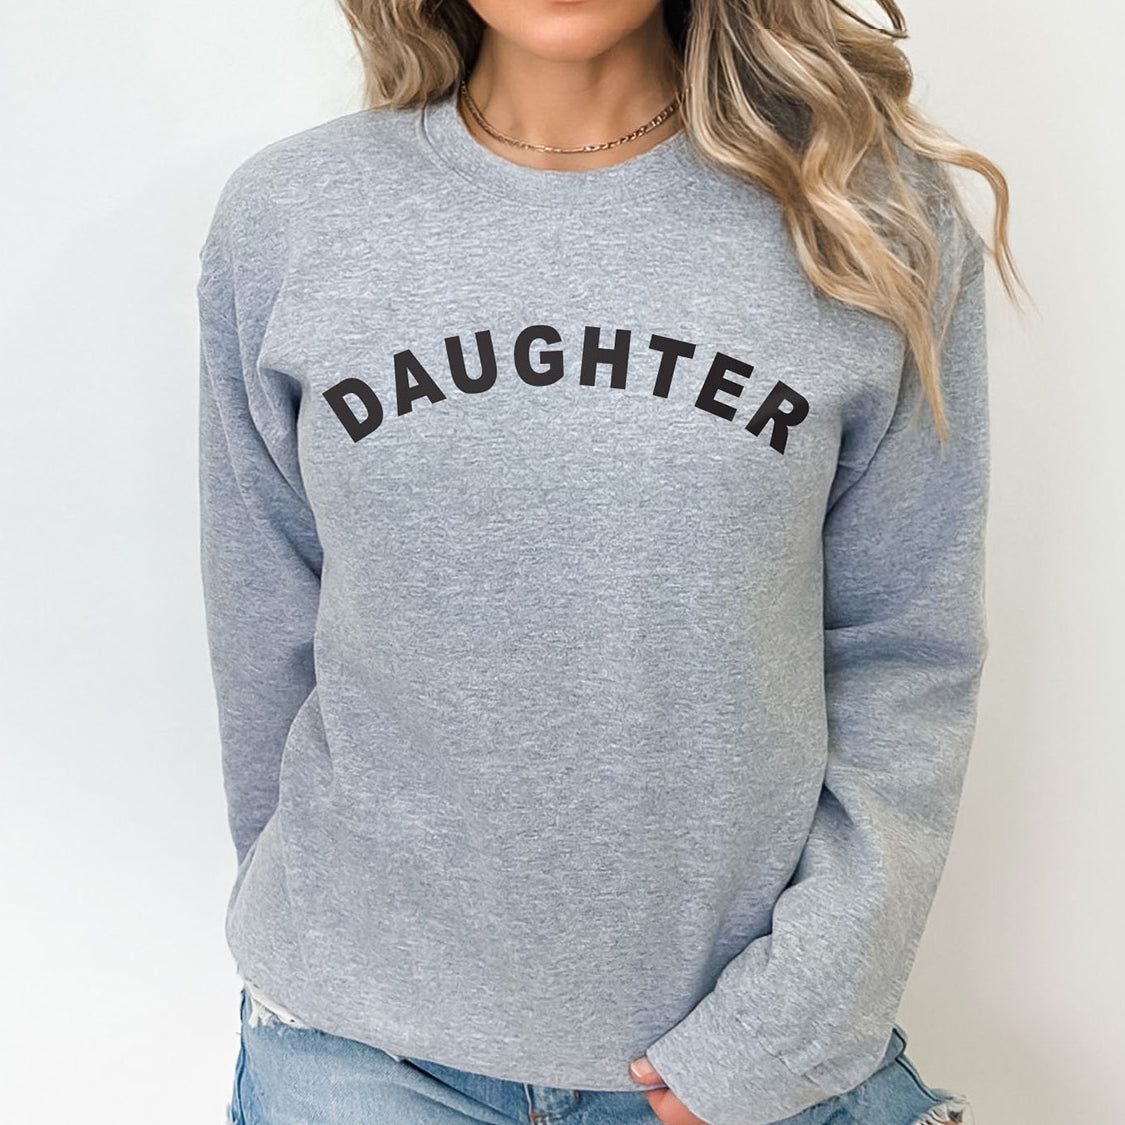 DAUGHTER Sweatshirt - Minimalistic Daughter Design Printed Sweatshirt